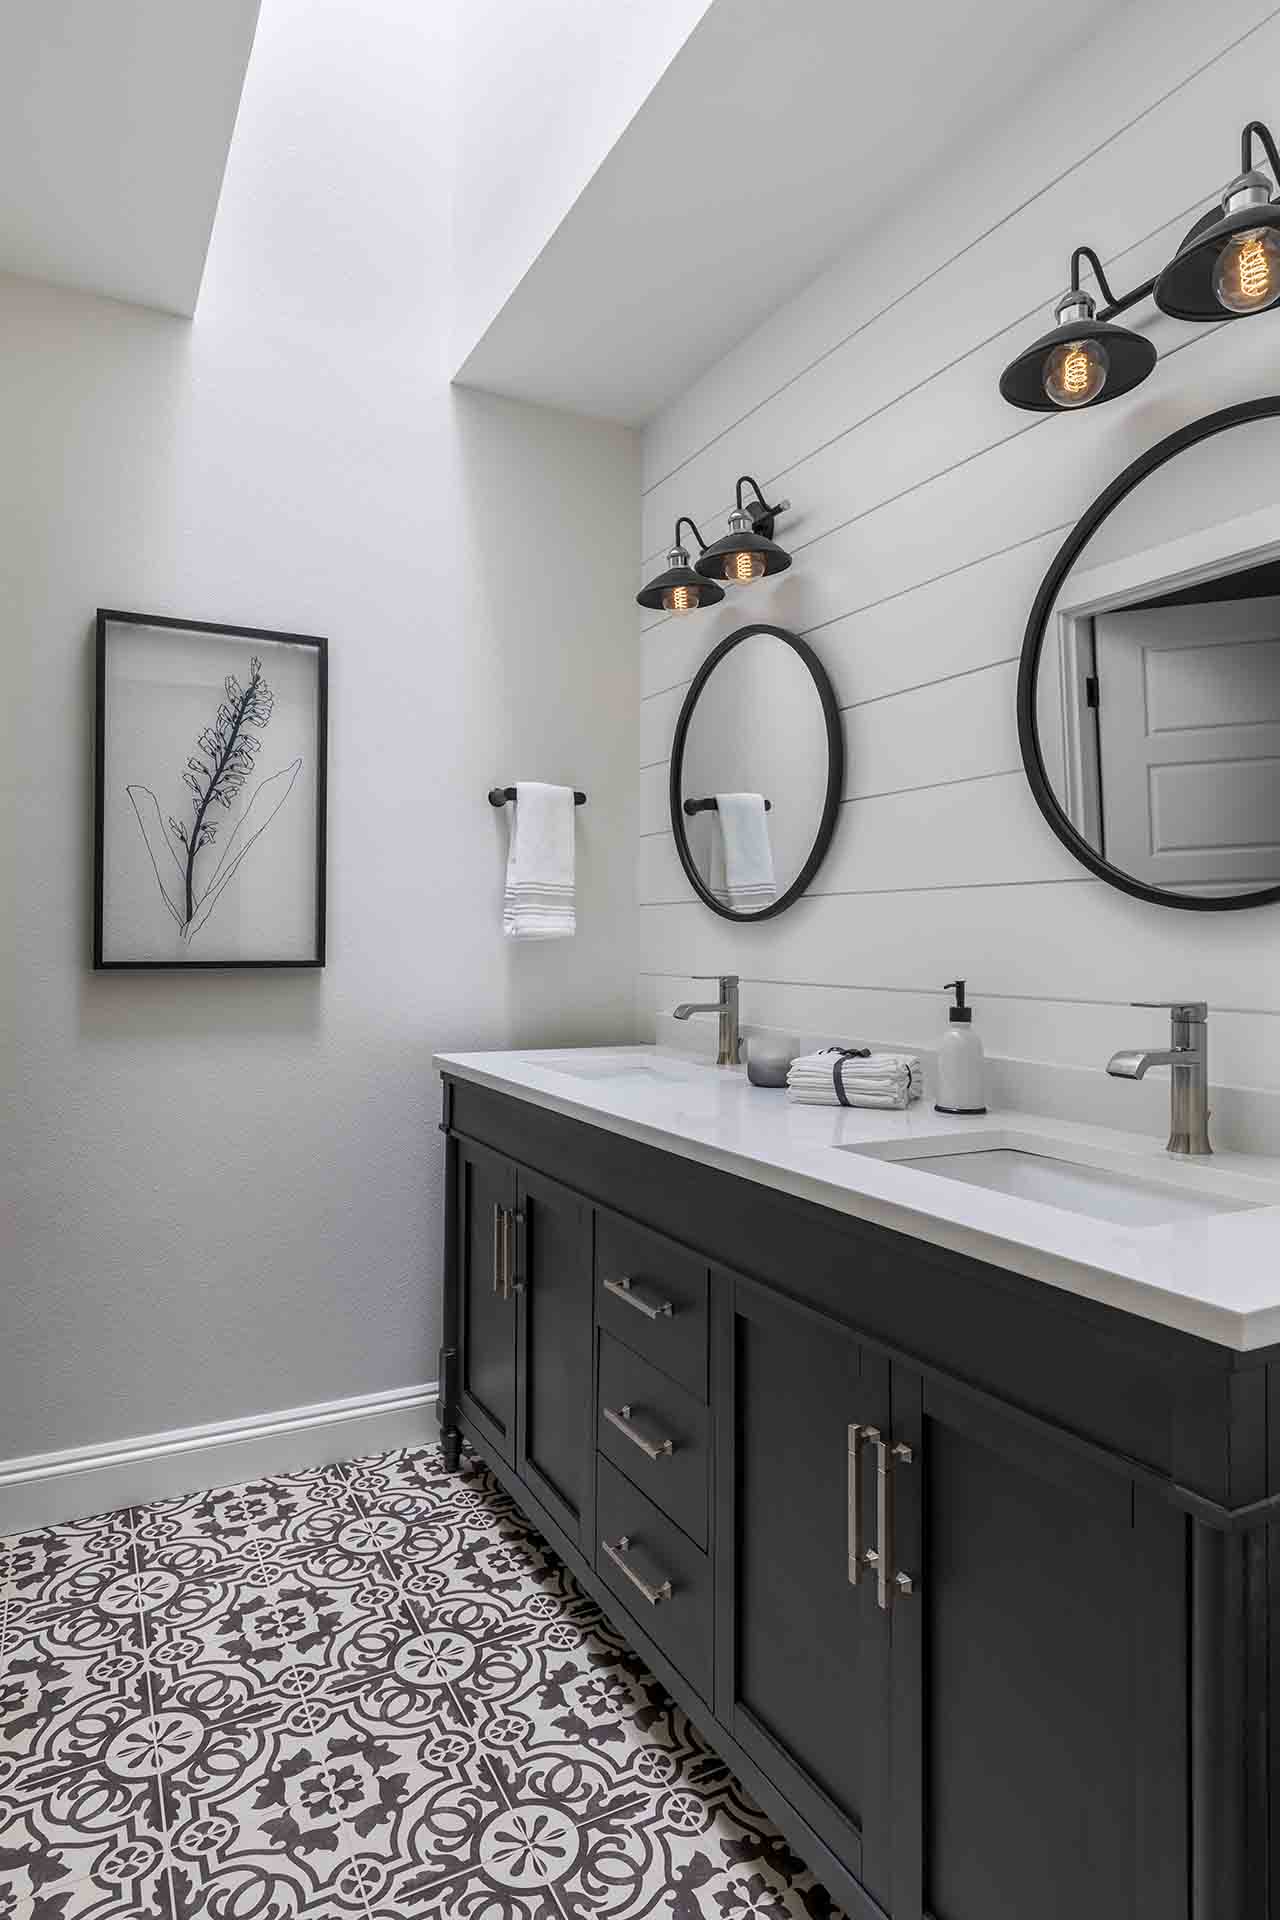 guest bathroom vanity with intricate tile work